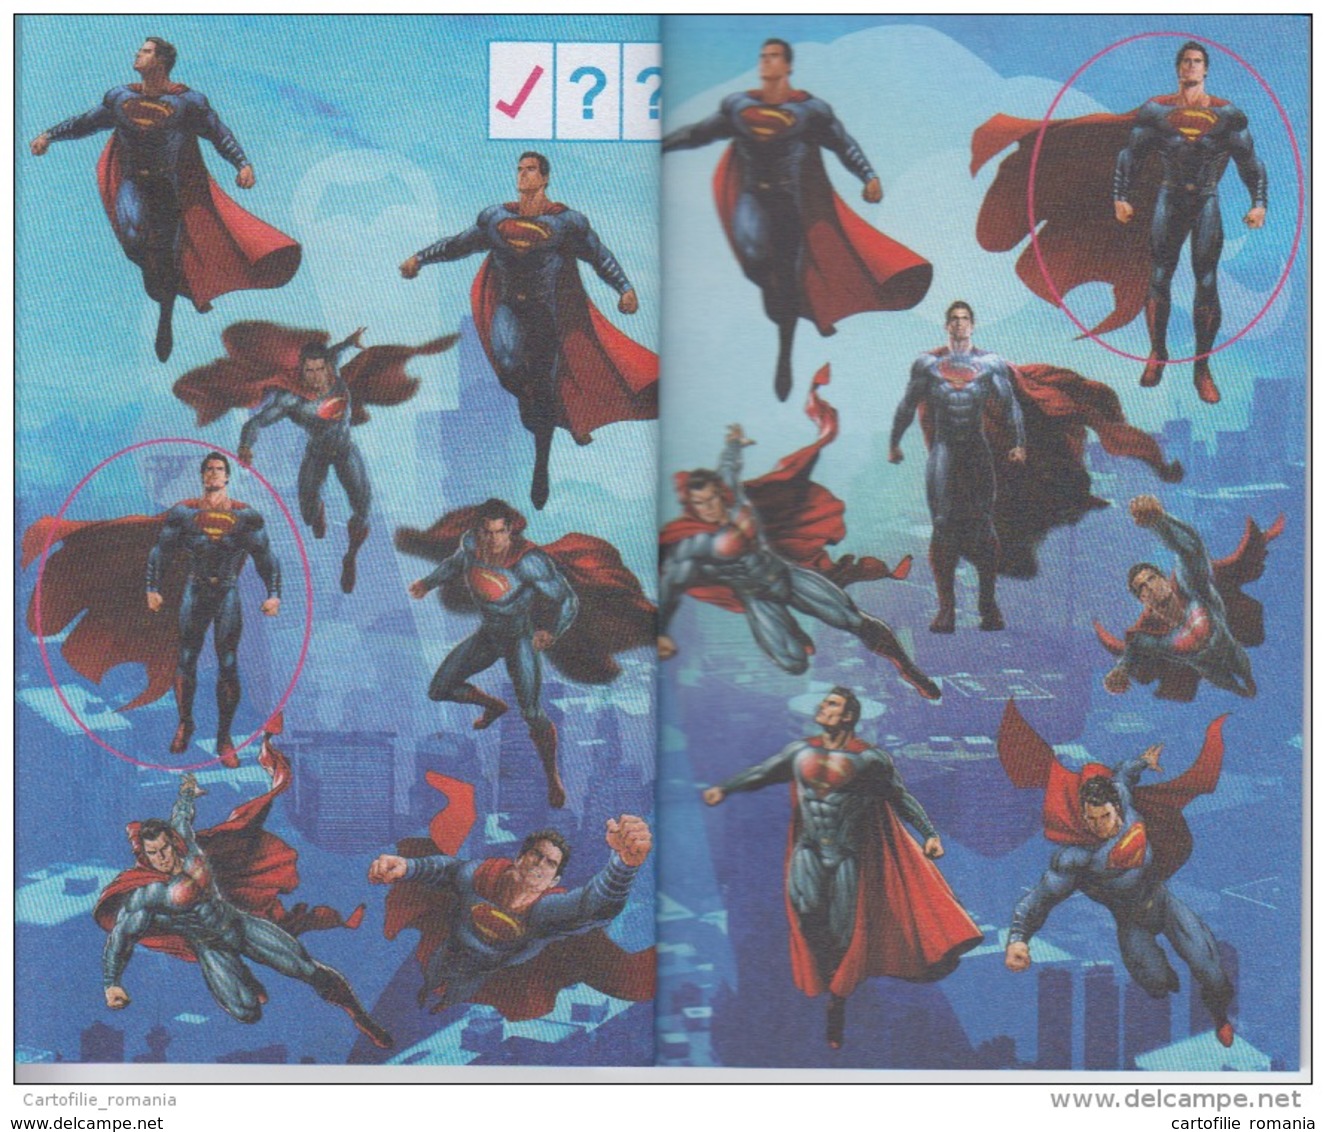 DC comics -  USA - Superman - Joe Schuster - Colouring book - Nestle edition - 2016 Warner Bros. - Book, comics, BD